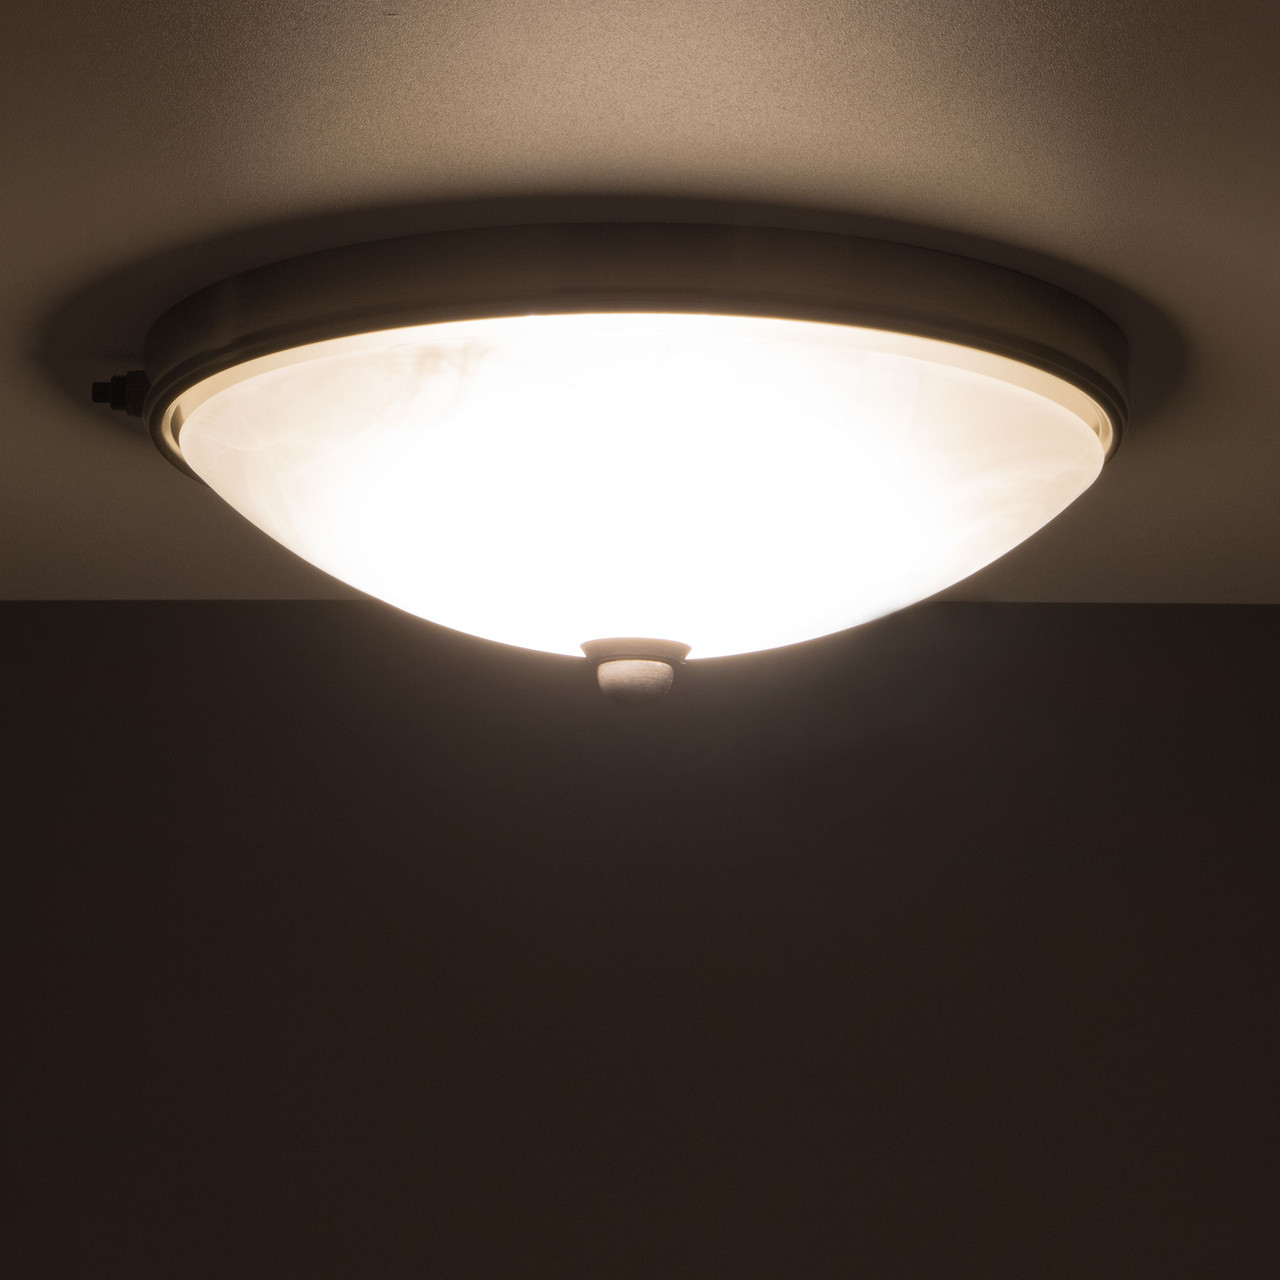 RV Ceiling Light 12V LED Nickel Finish